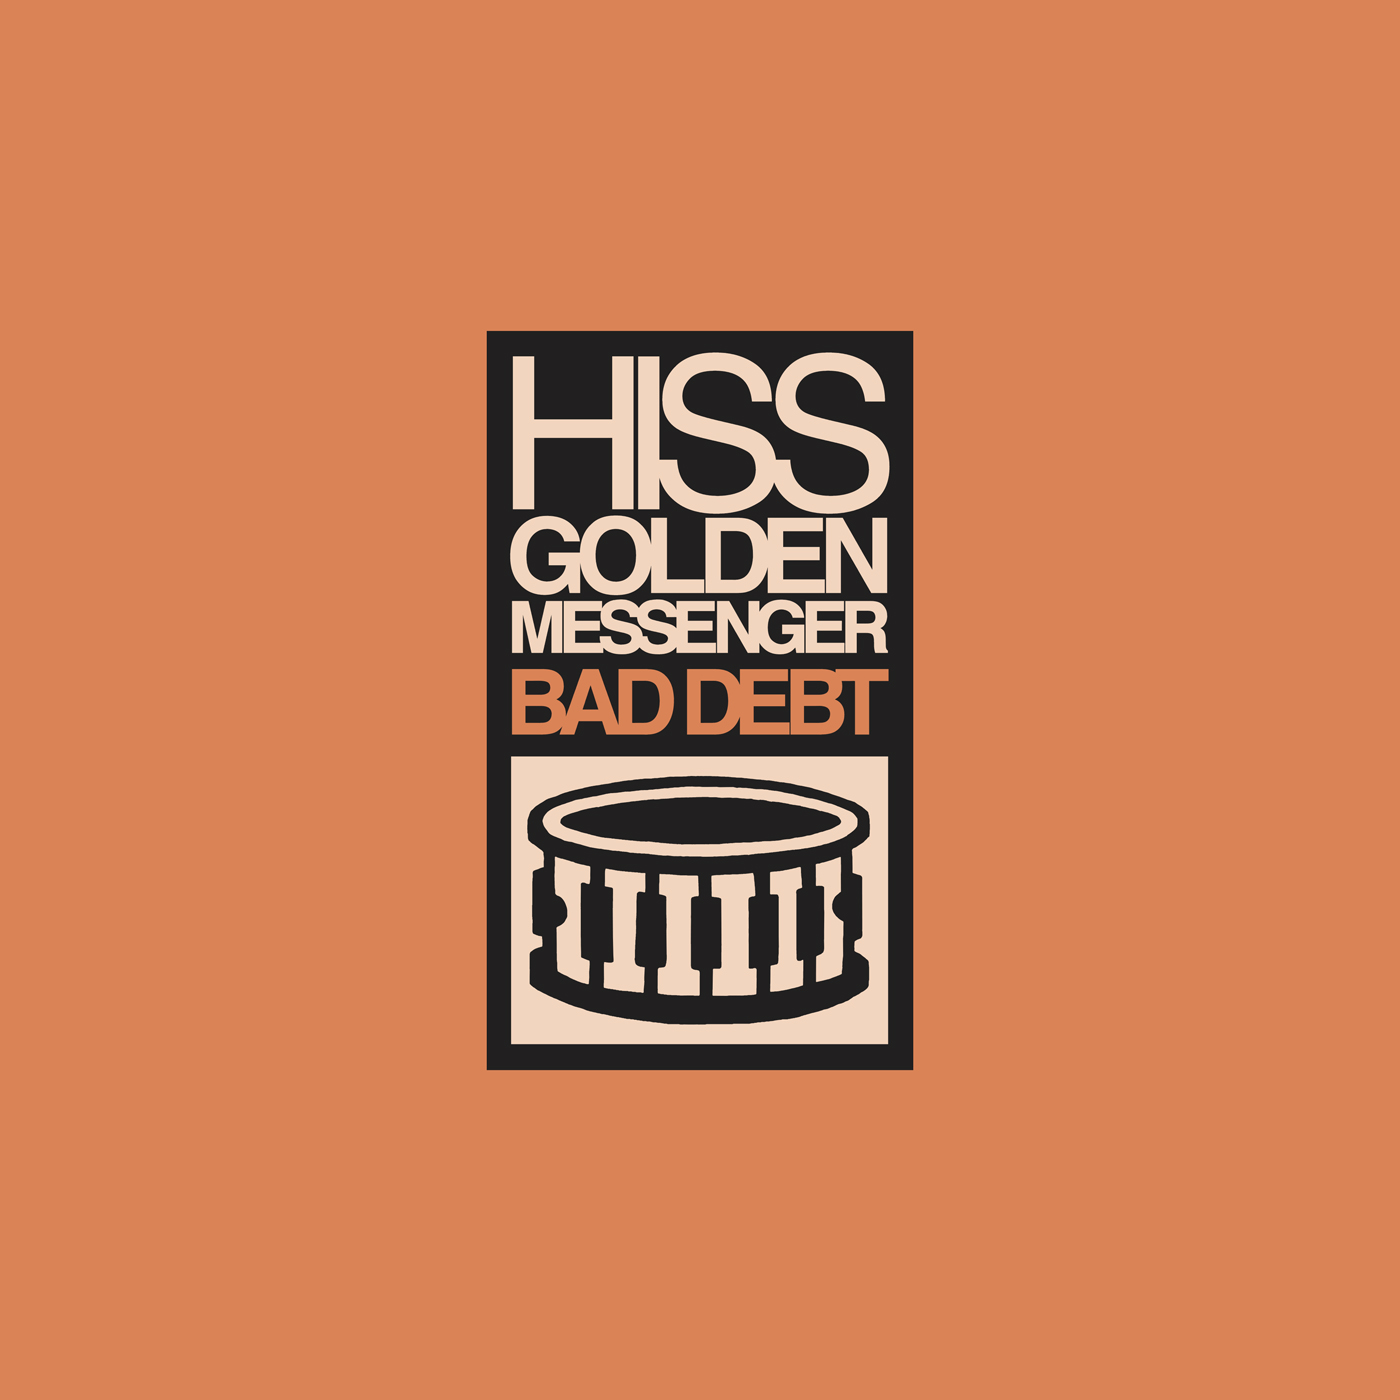 Hiss Golden Messenger - Bad Debt (Re-issue)